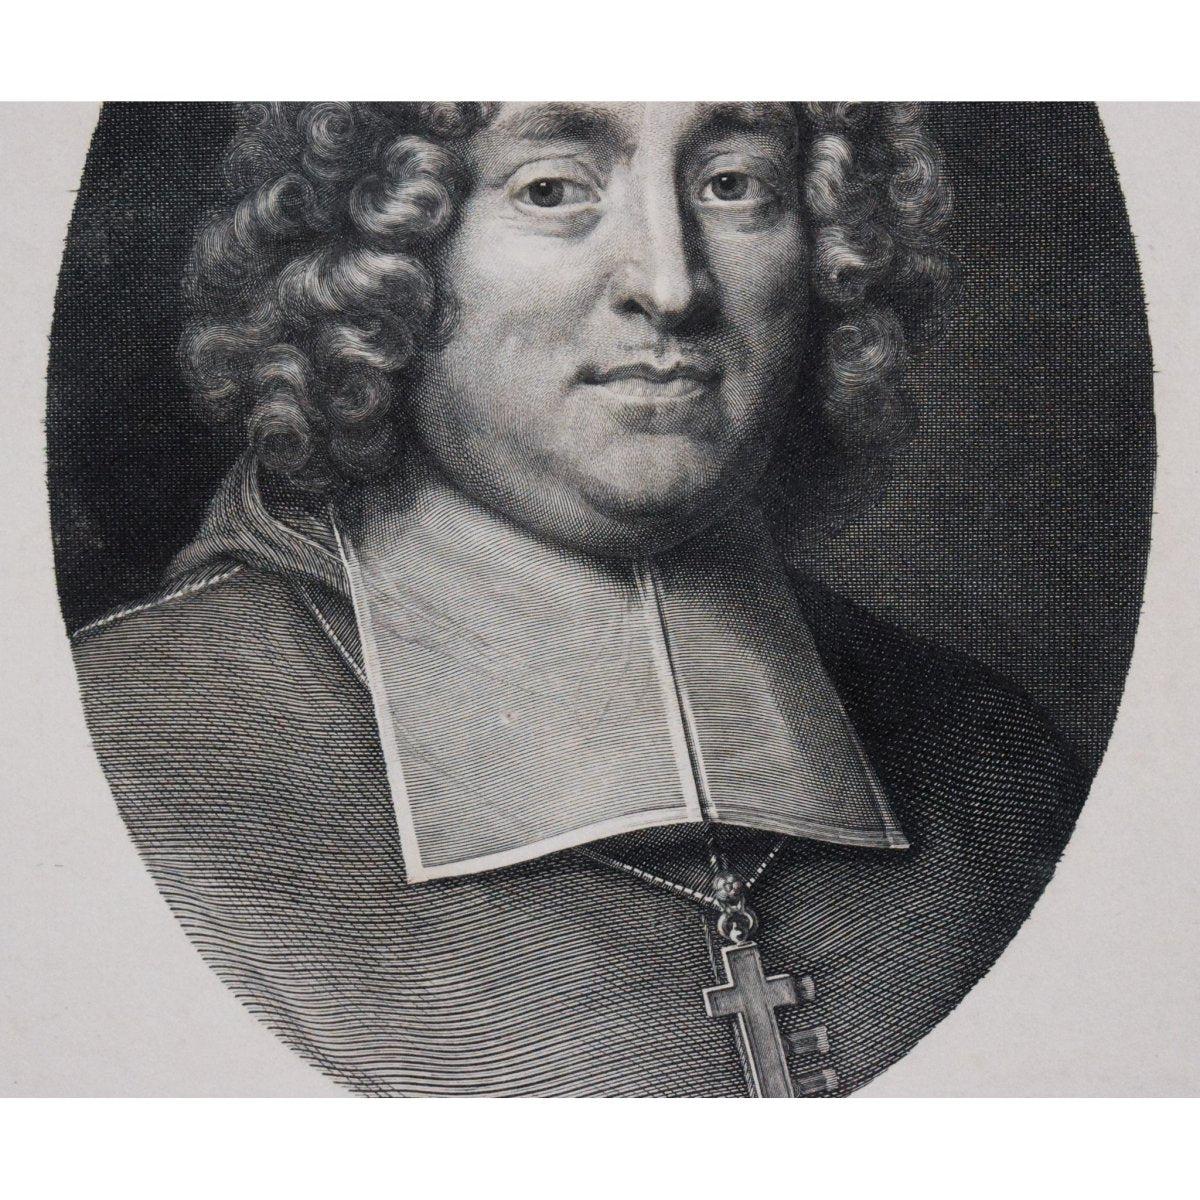 Antique portrait engraving french archbishop Colbert original 1693 by Gerard Edelinck for sale at Winckelmann Gallery